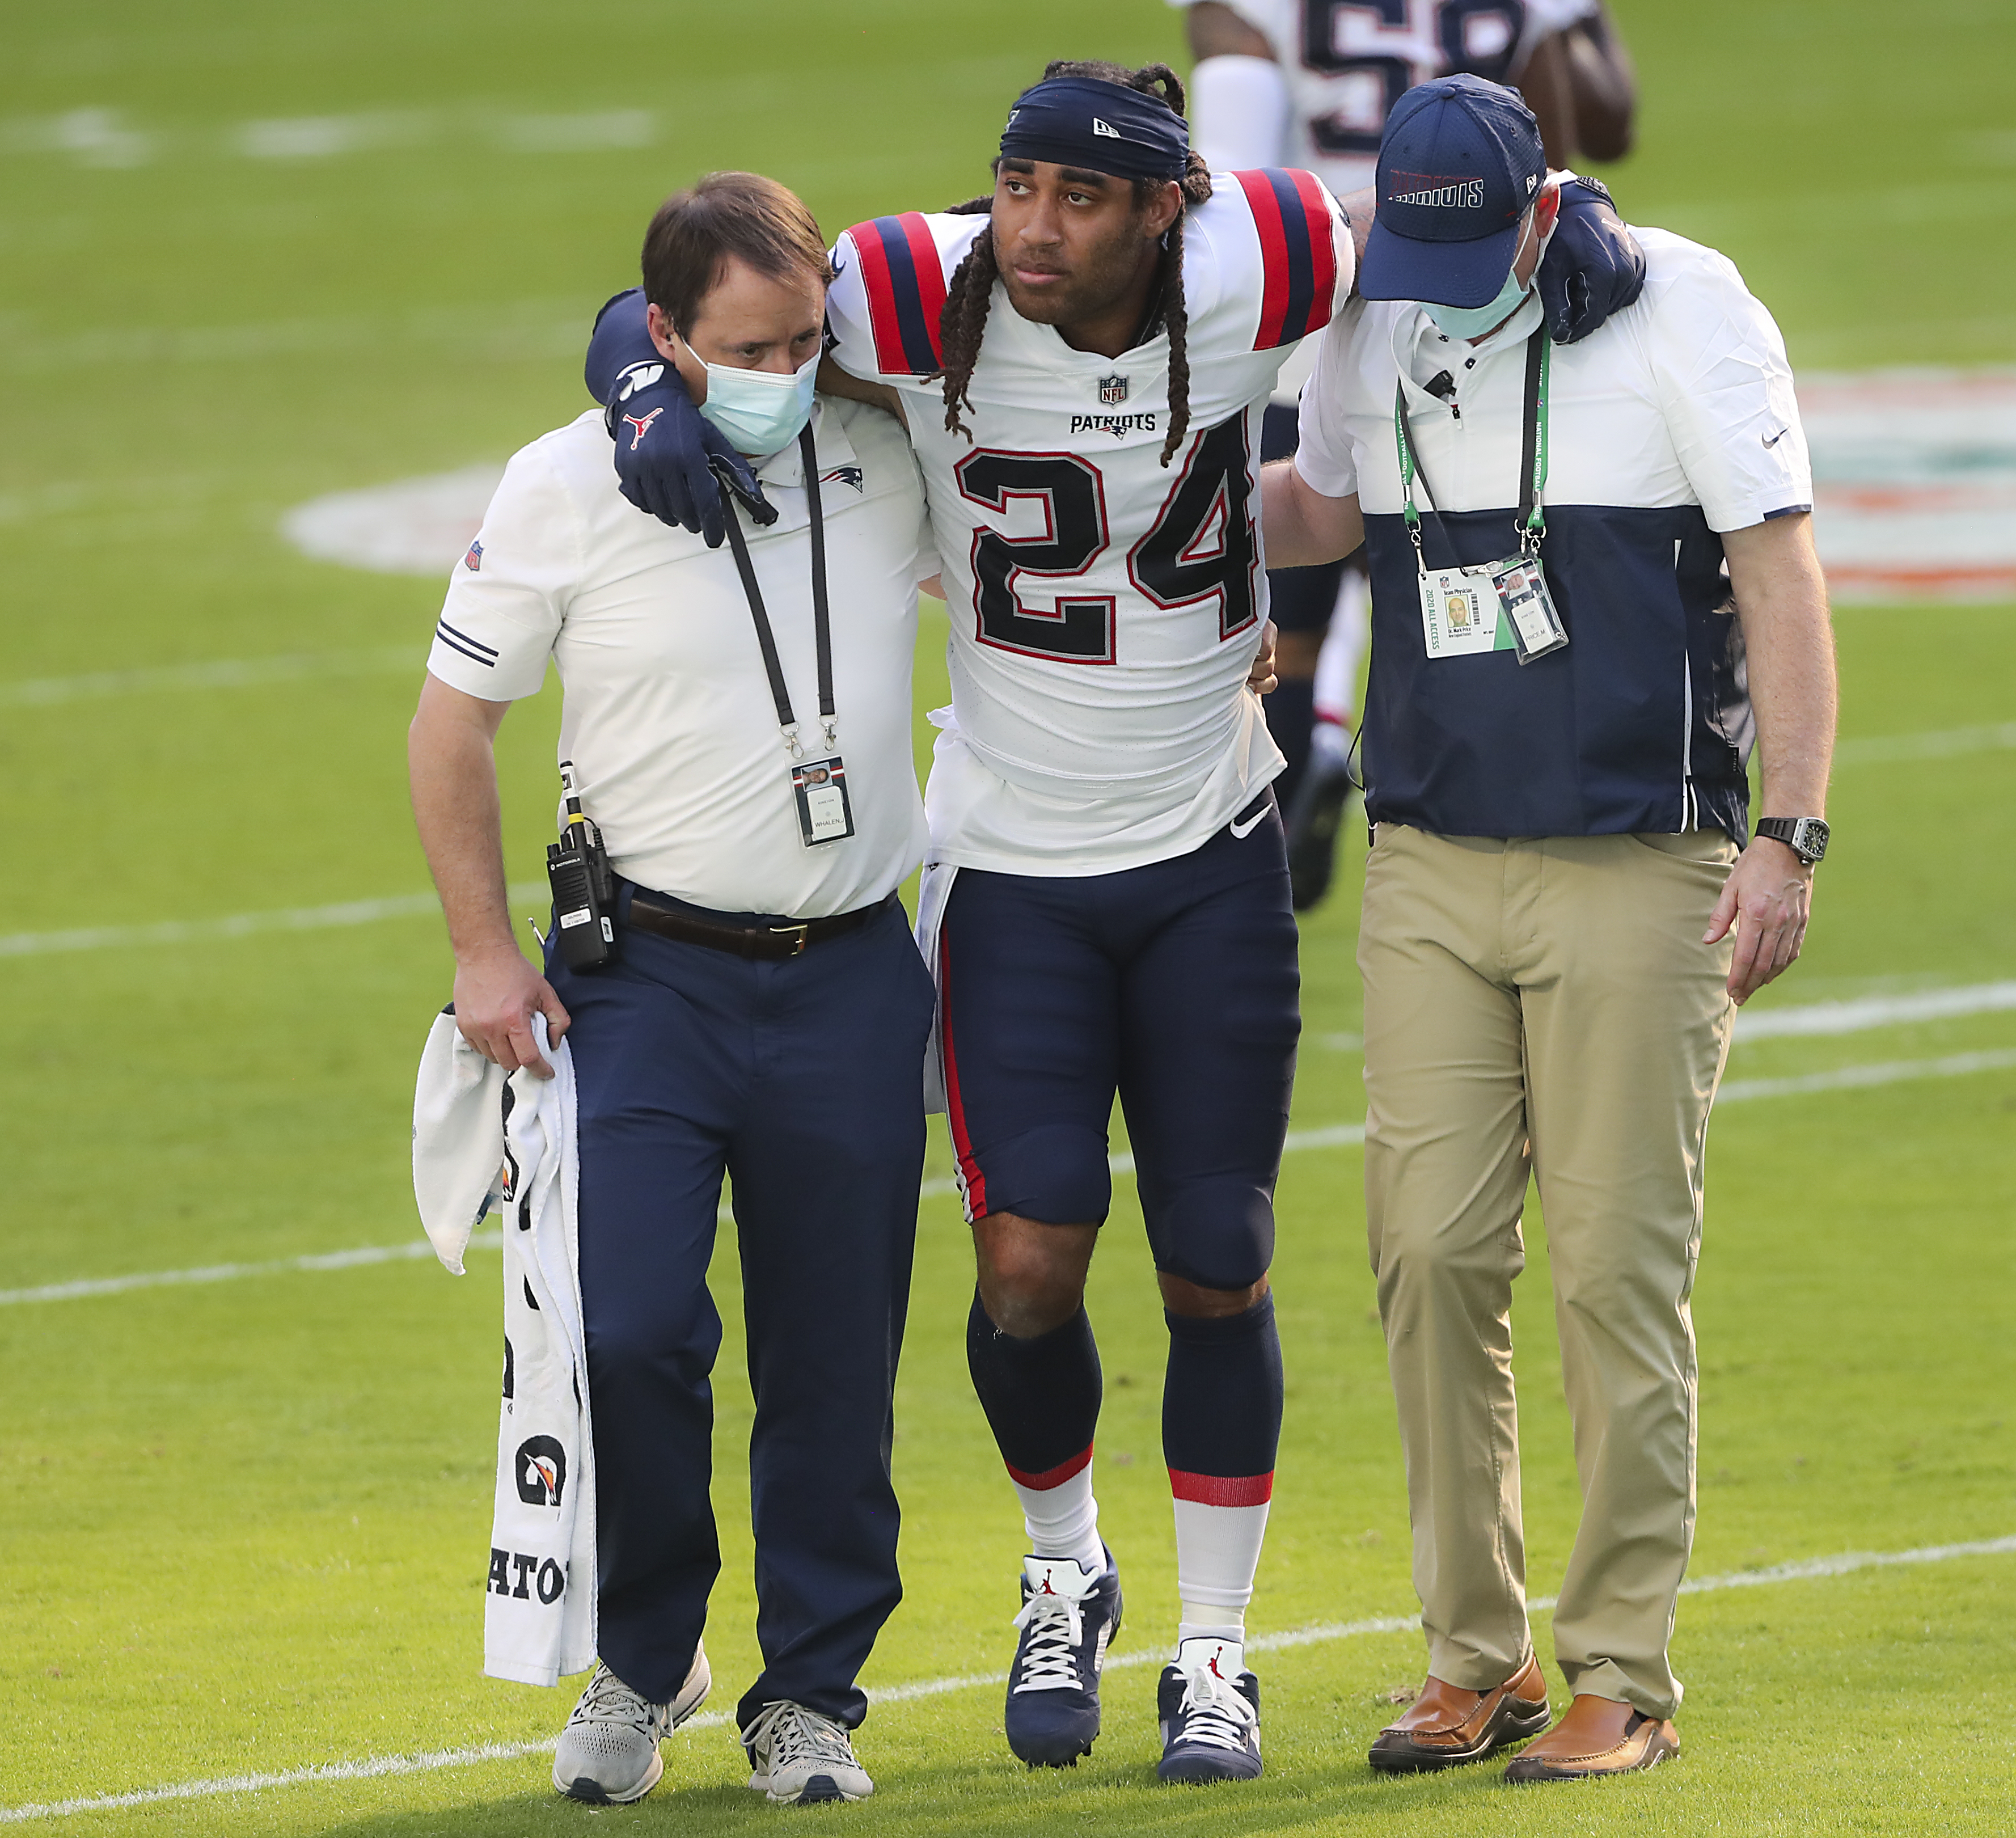 Report: Patriots All-Pro Gilmore to undergo season-ending surgery